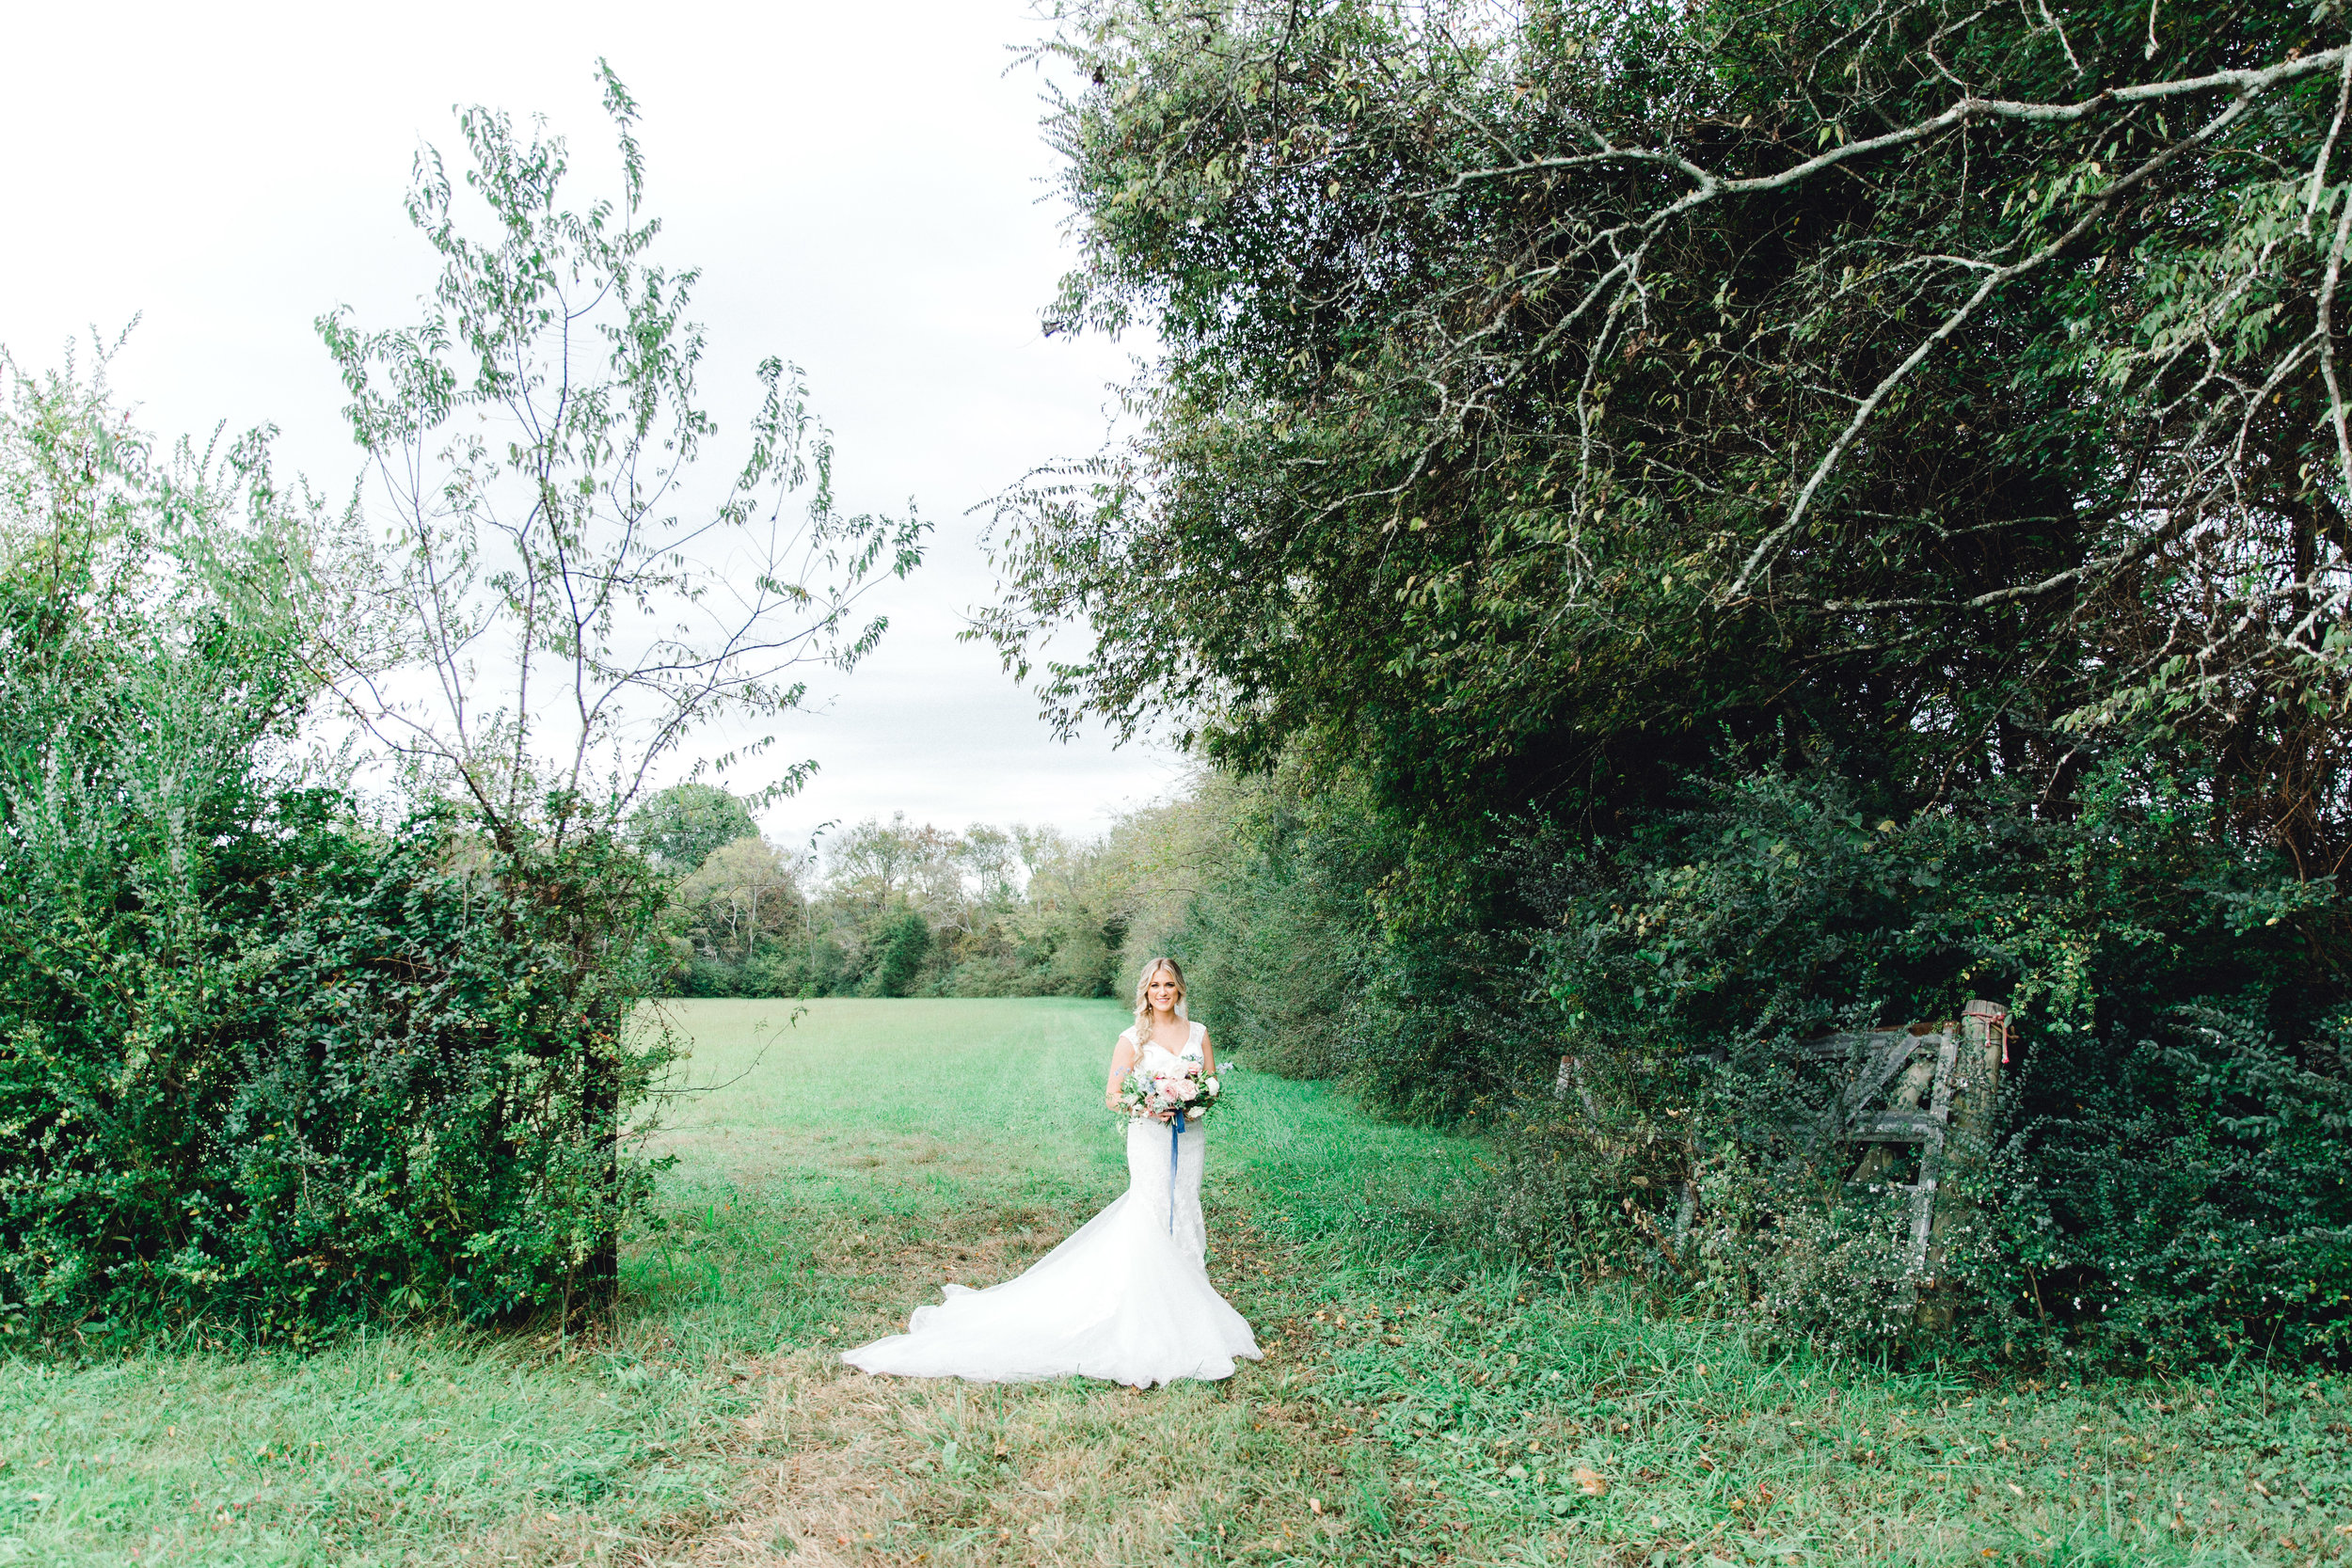 Paige-Mercer-Photography-Florida-Wedding-Photographer-Alyssa&Drew-37.jpg